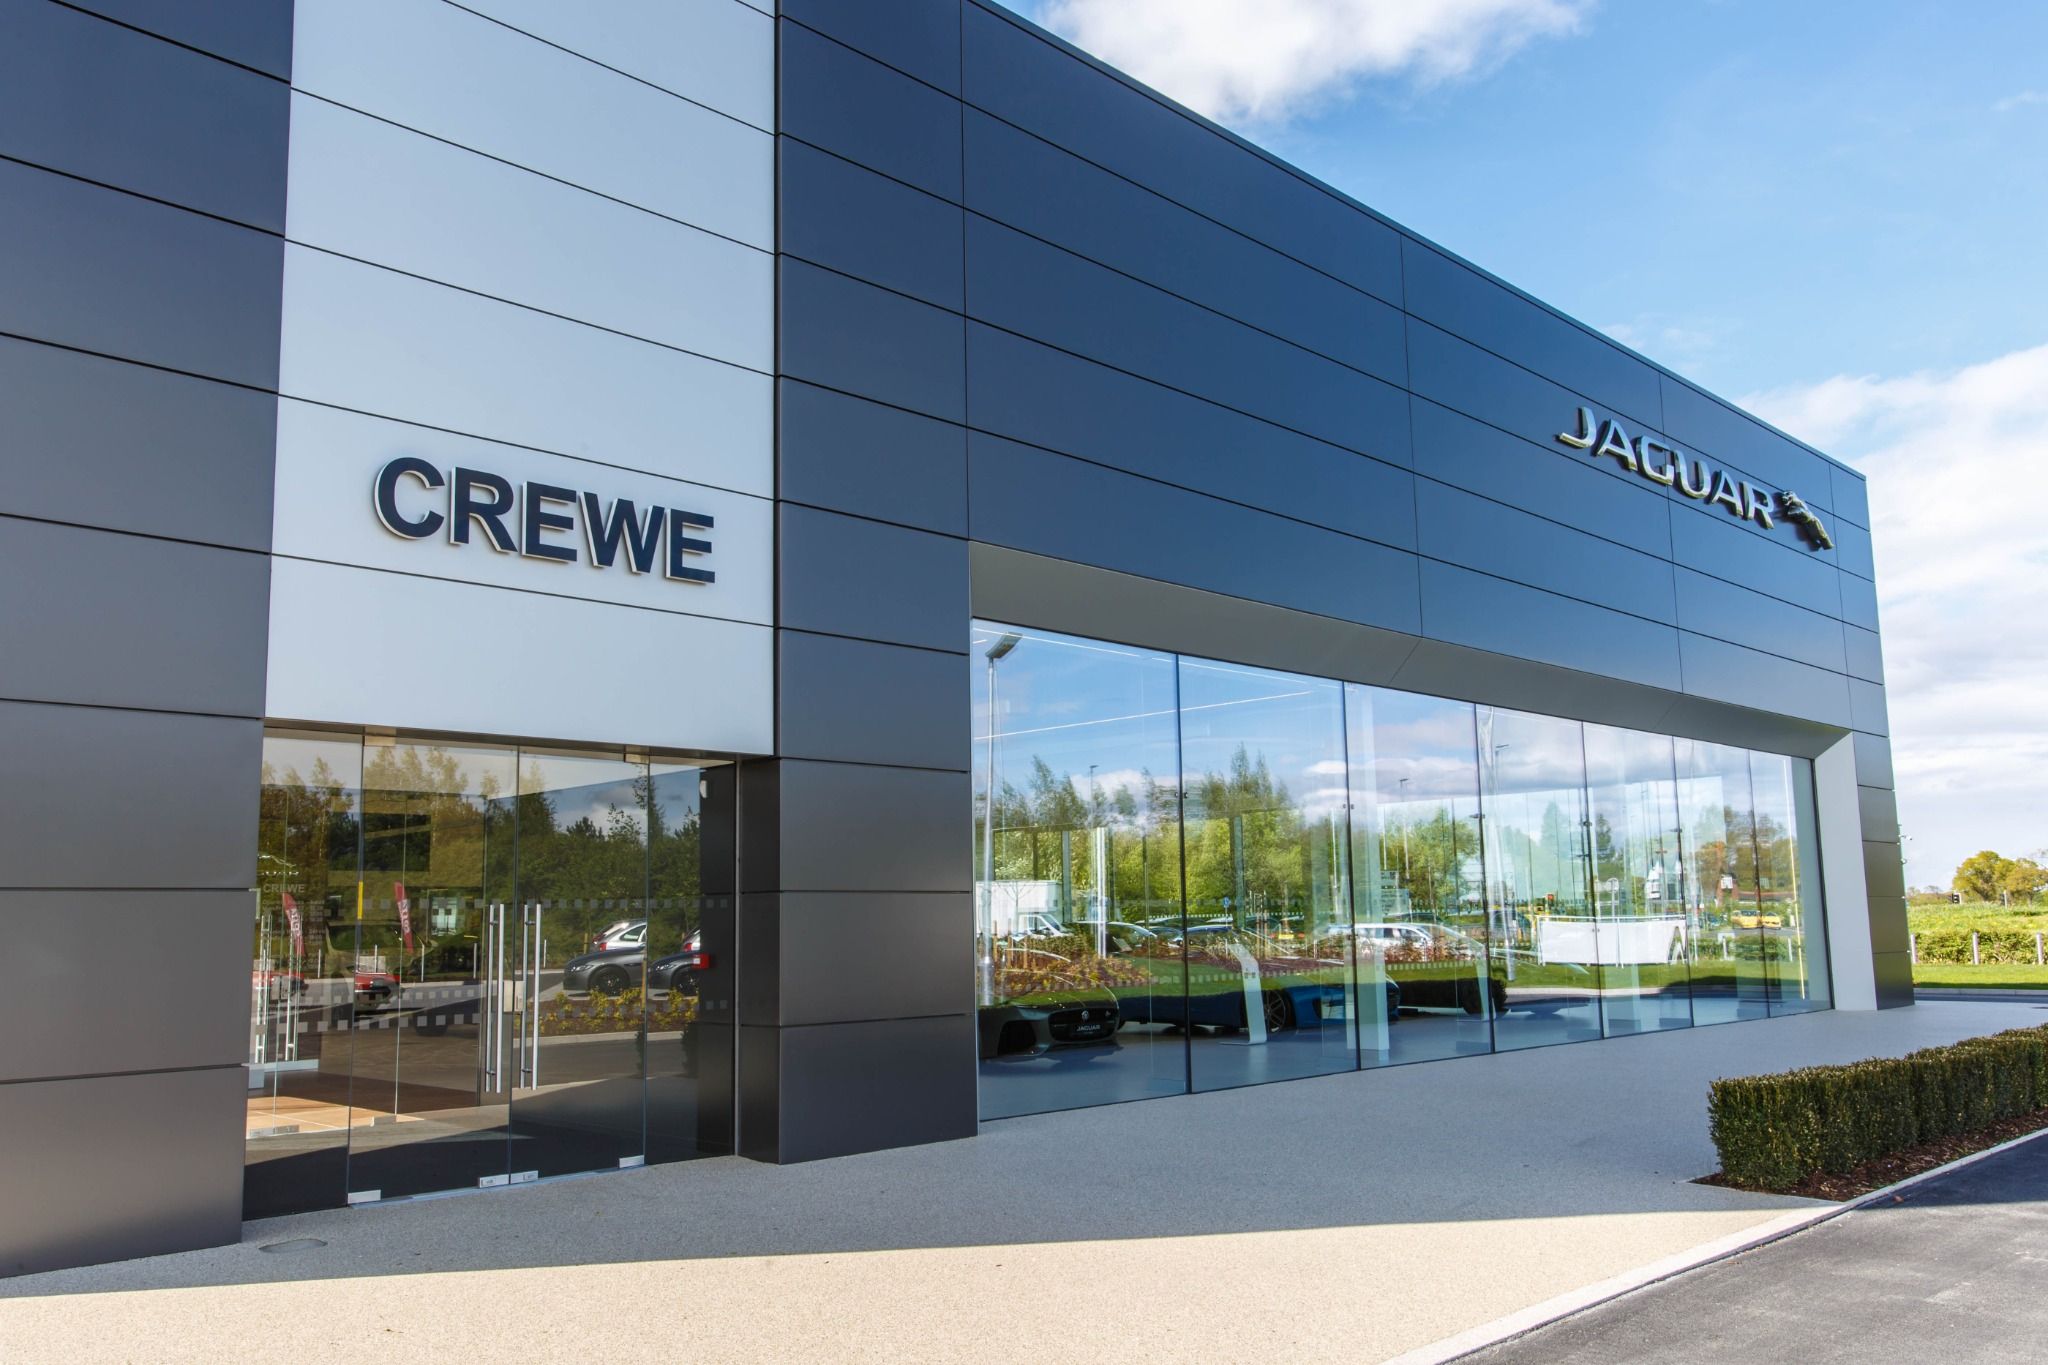 Swansway Crewe Jaguar exterior